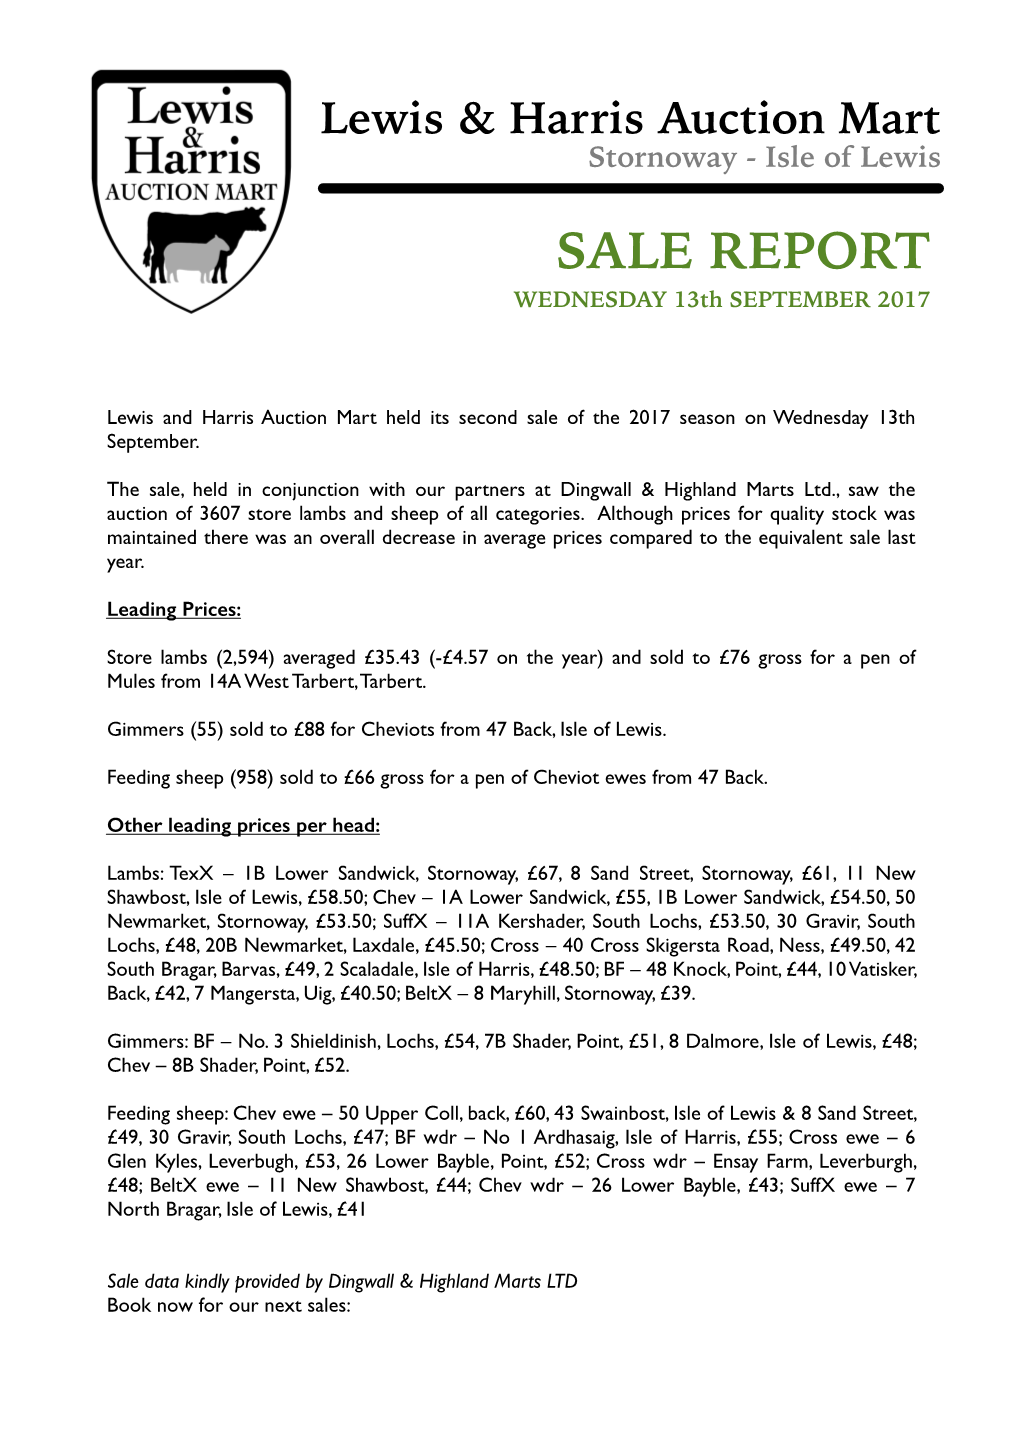 Sale Report 13Th Sep 17